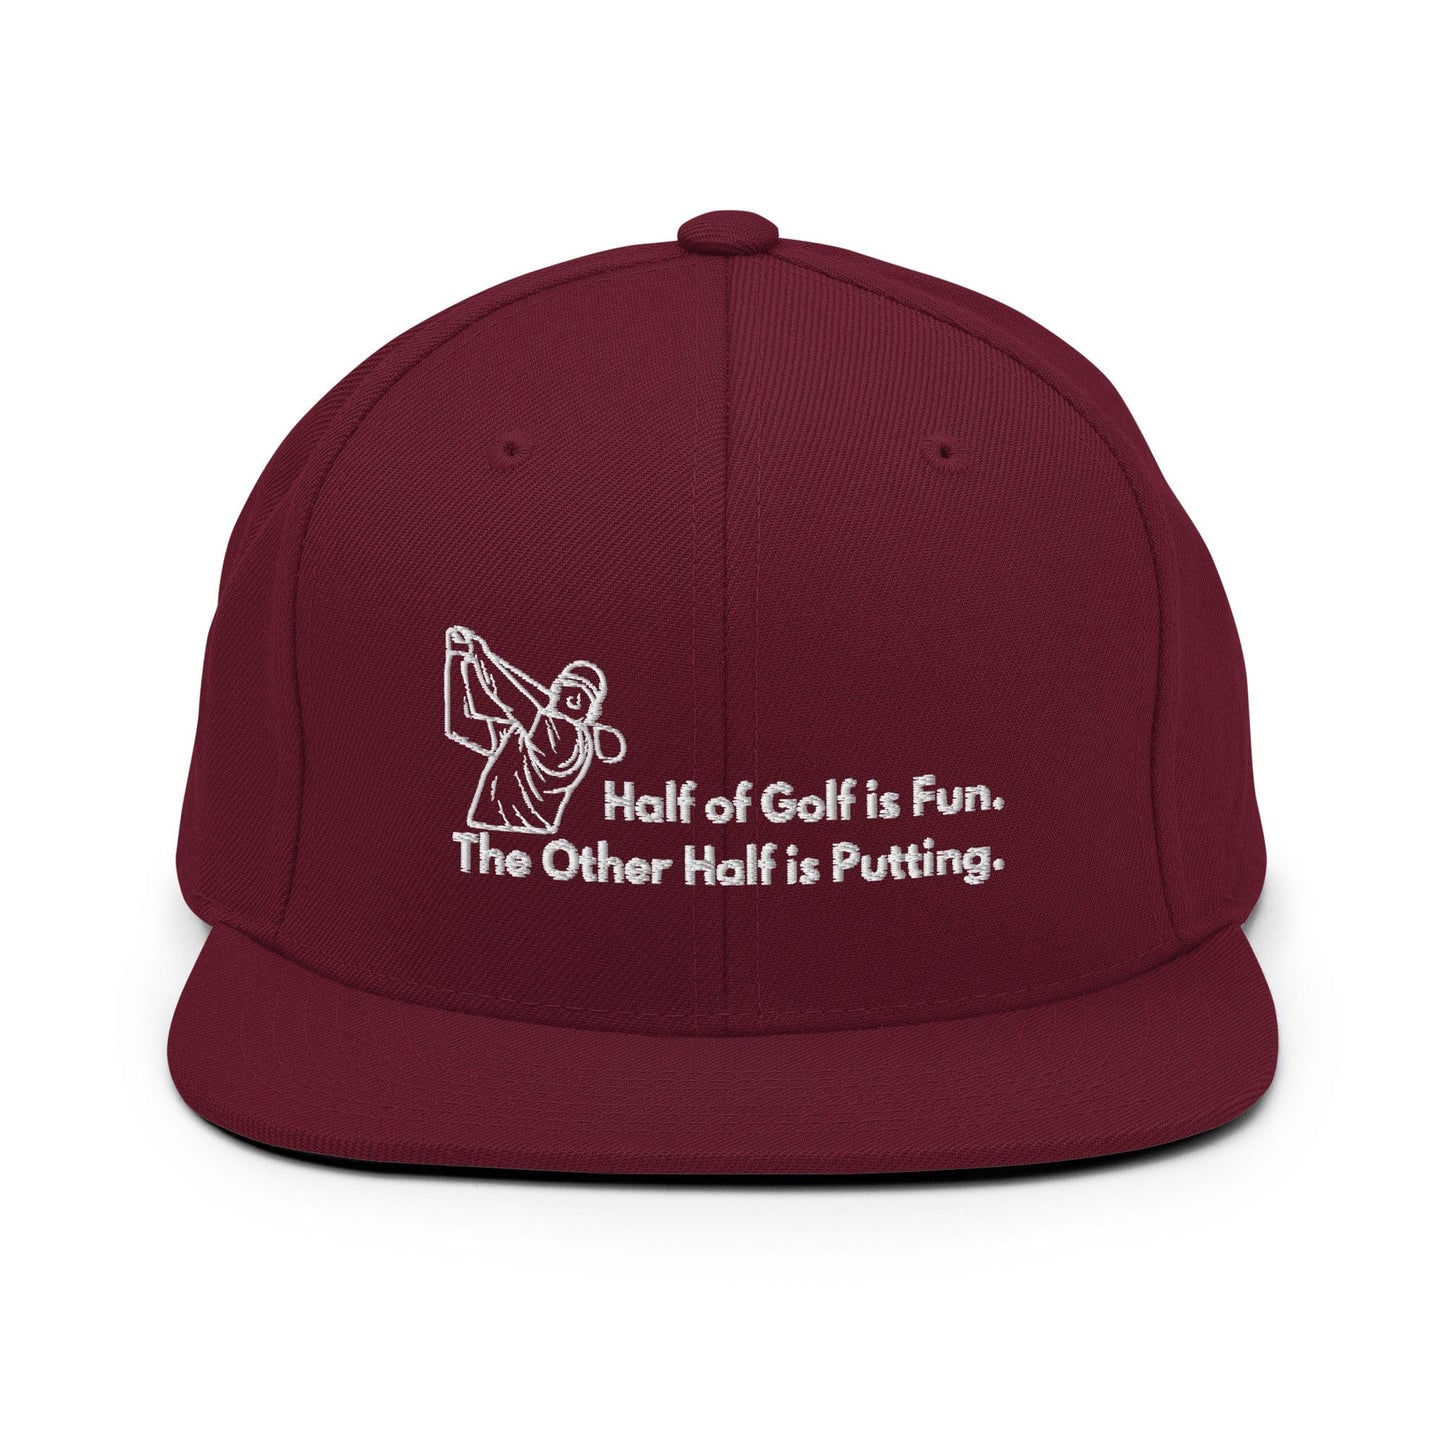 Funny Golfer Gifts  Snapback Hat Maroon Half of Golf is Fun Snapback Hat